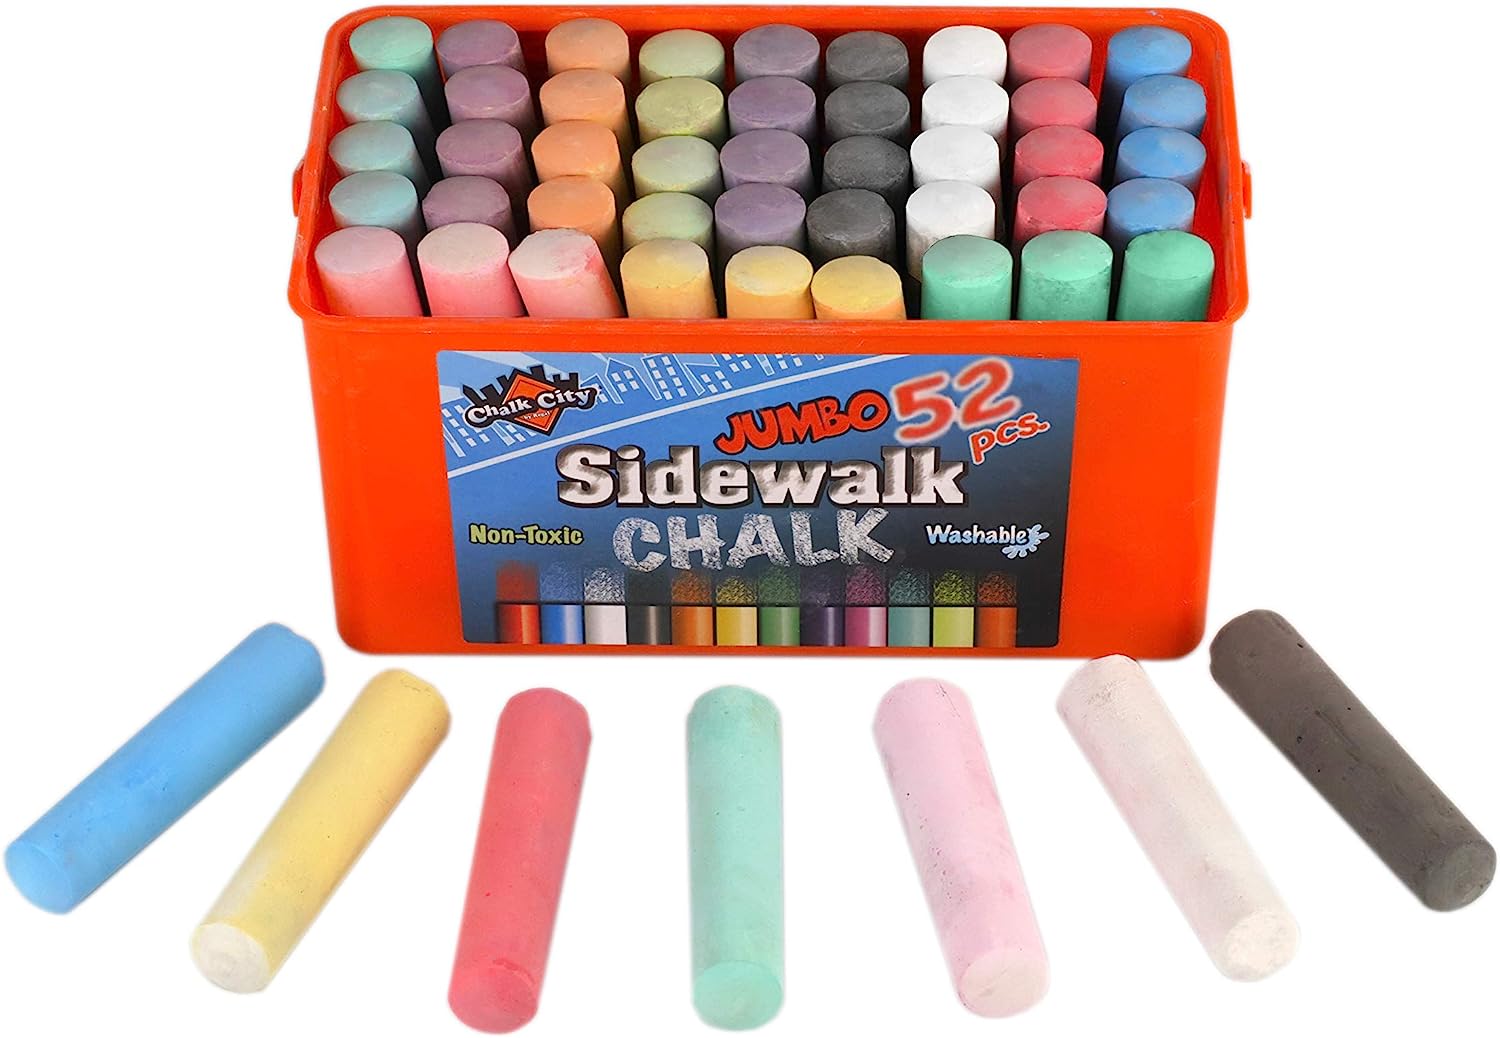 Chalk City Sidewalk Chalk, 52 Count, 12 Colors, Jumbo [...]